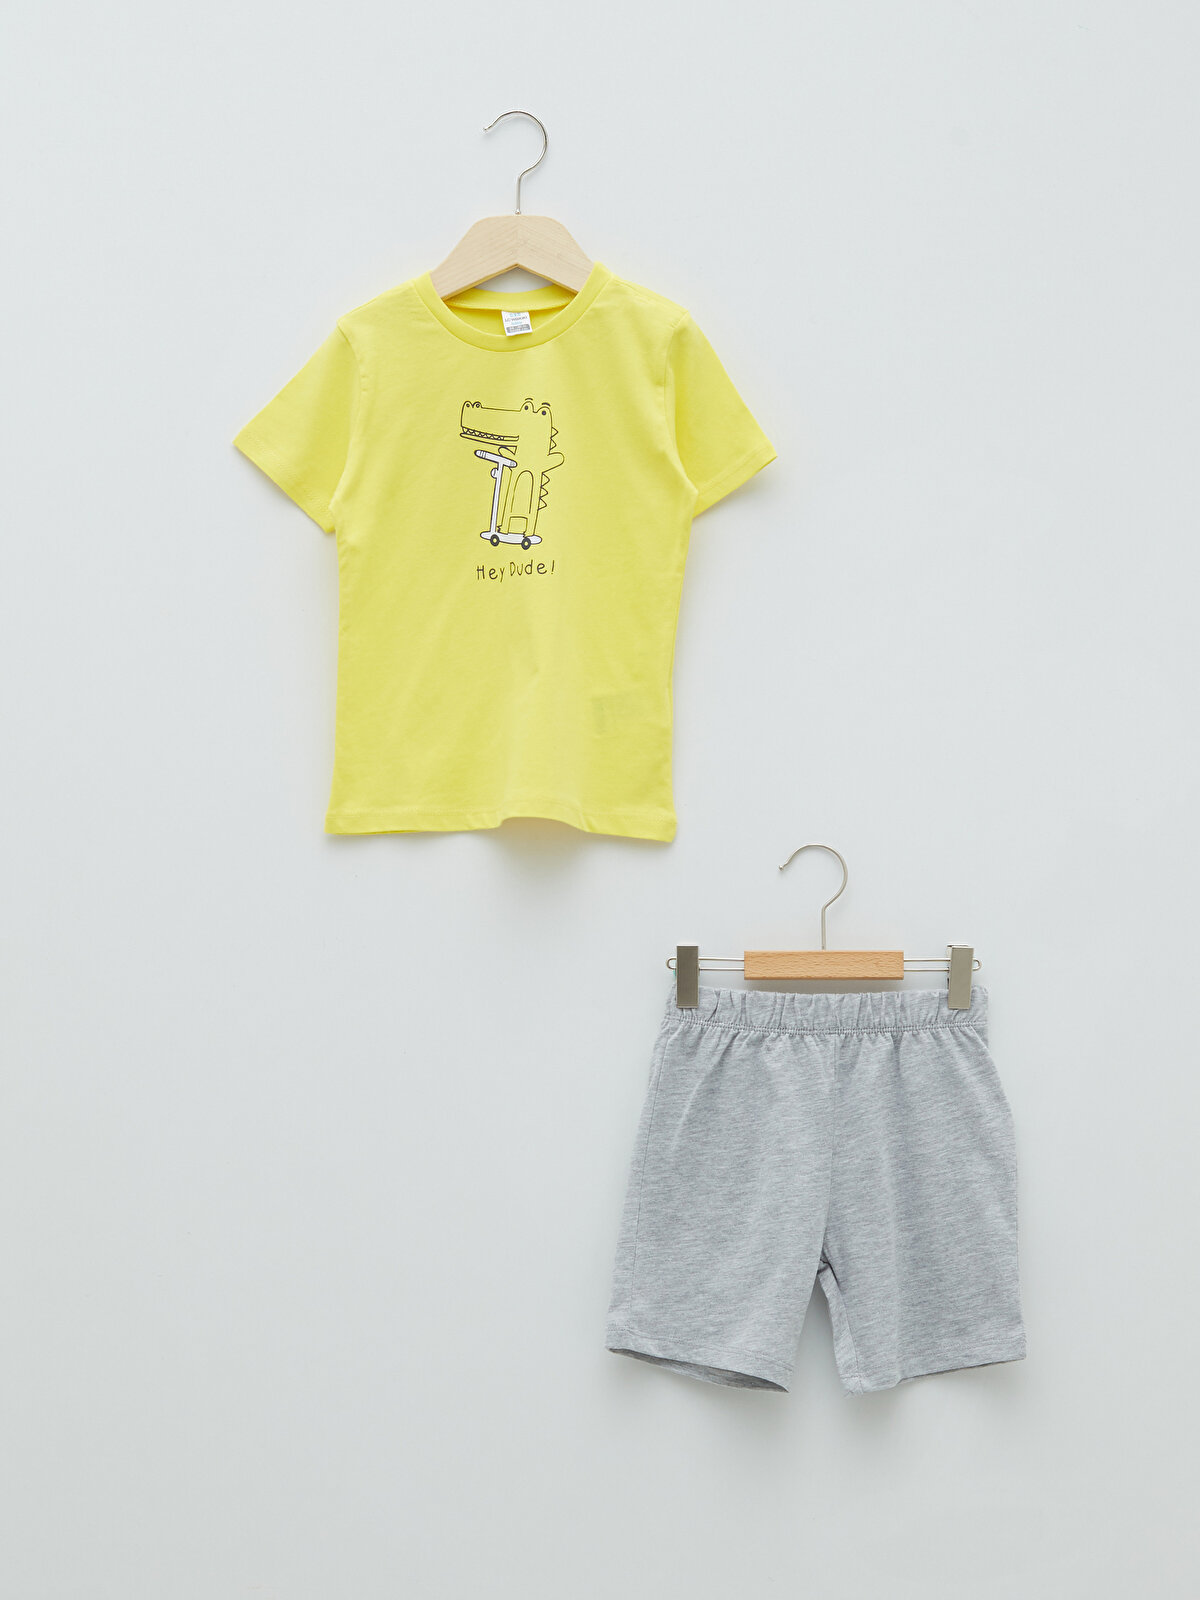 Crew Neck Short Sleeve Printed Baby Boy T-Shirt and Shorts 2-Piece Set  -S26920Z1-JSD - S26920Z1-JSD - LC Waikiki